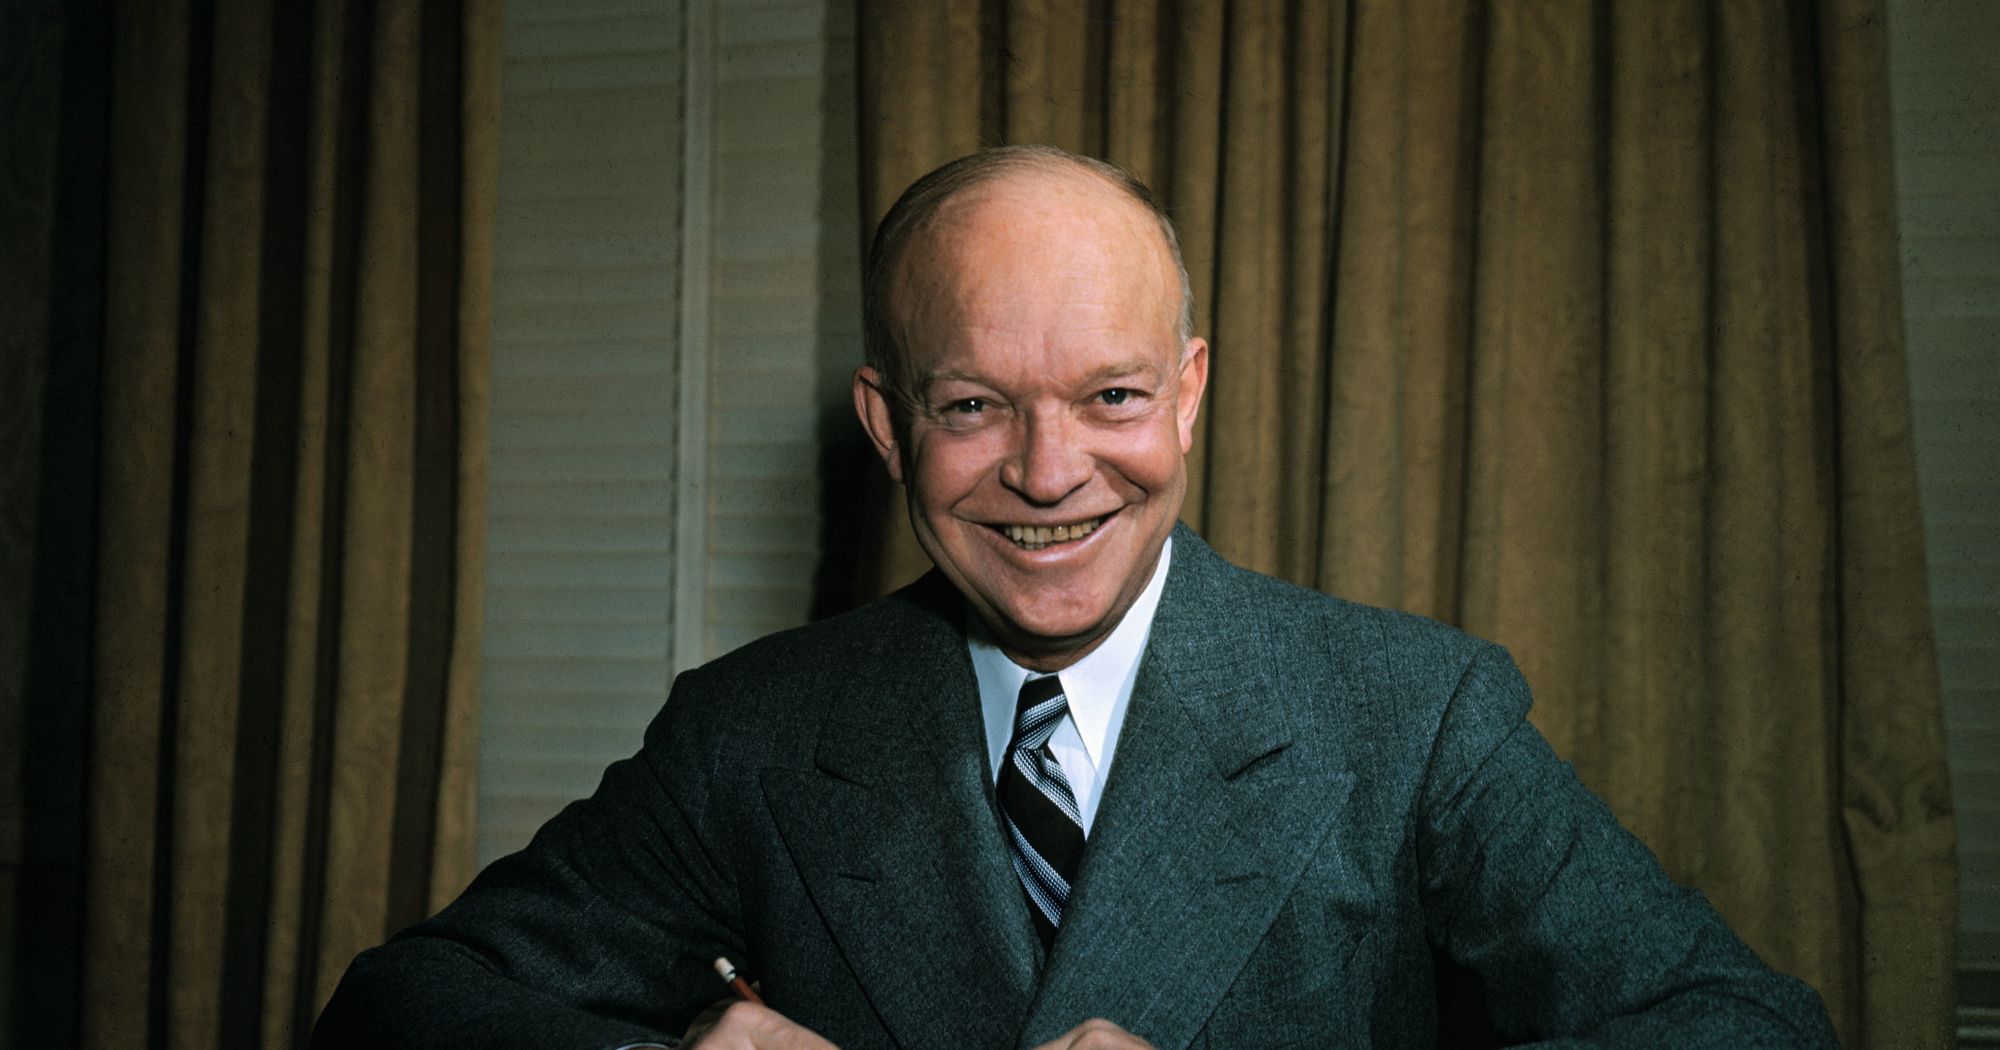 Dwight Eisenhower (No. 34) - IQ 145.1